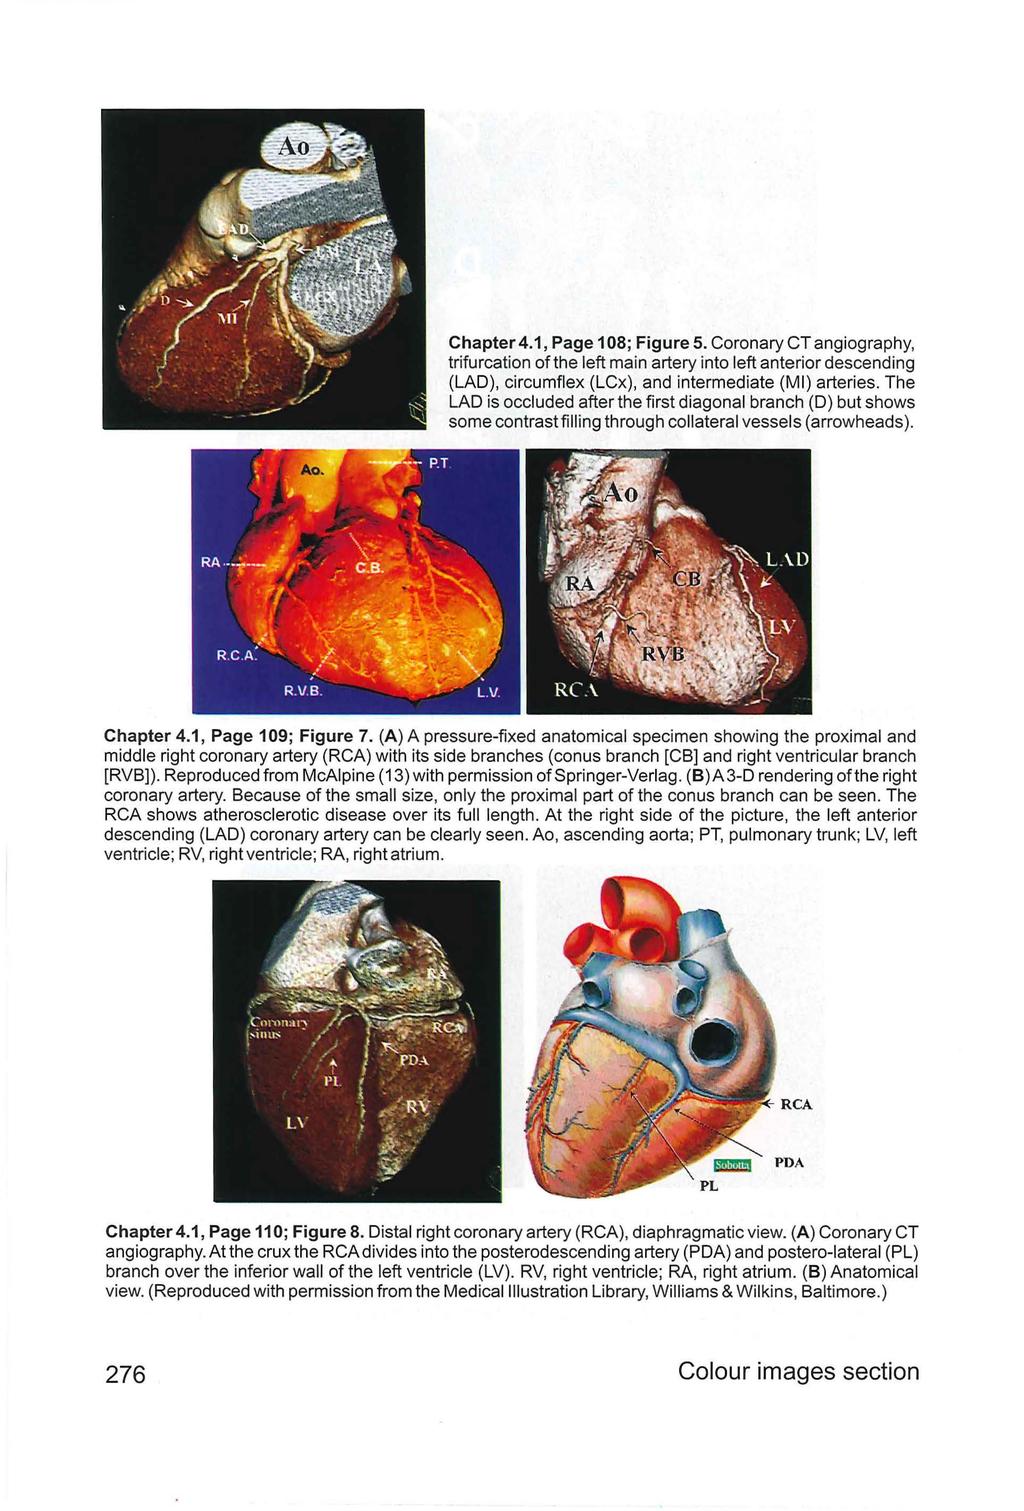 Chapter4.1, Page 108; Figure 5. Coronary CTangiography, trifurcation of the left main artery into left anterior descending (LAD), circumflex (LCx), and intermediate (MI) arteries.